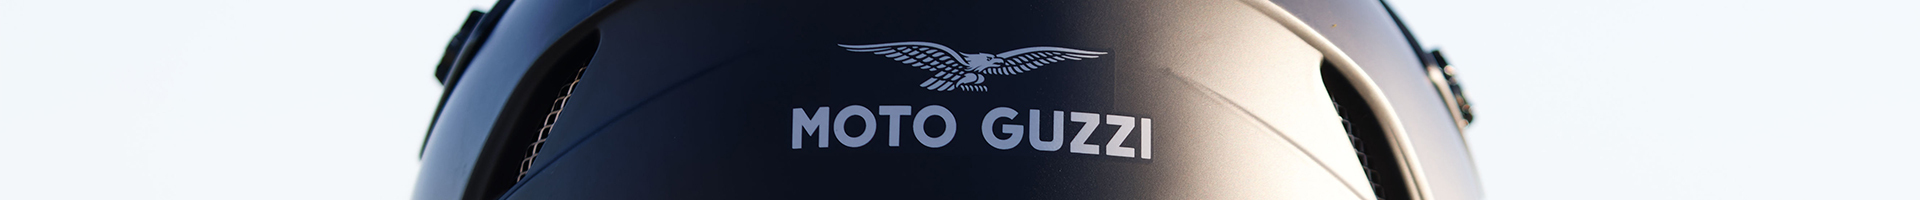 Casco Jet Moto Guzzi Aviazione Navale, Jet, Caschi, Catalogo completo